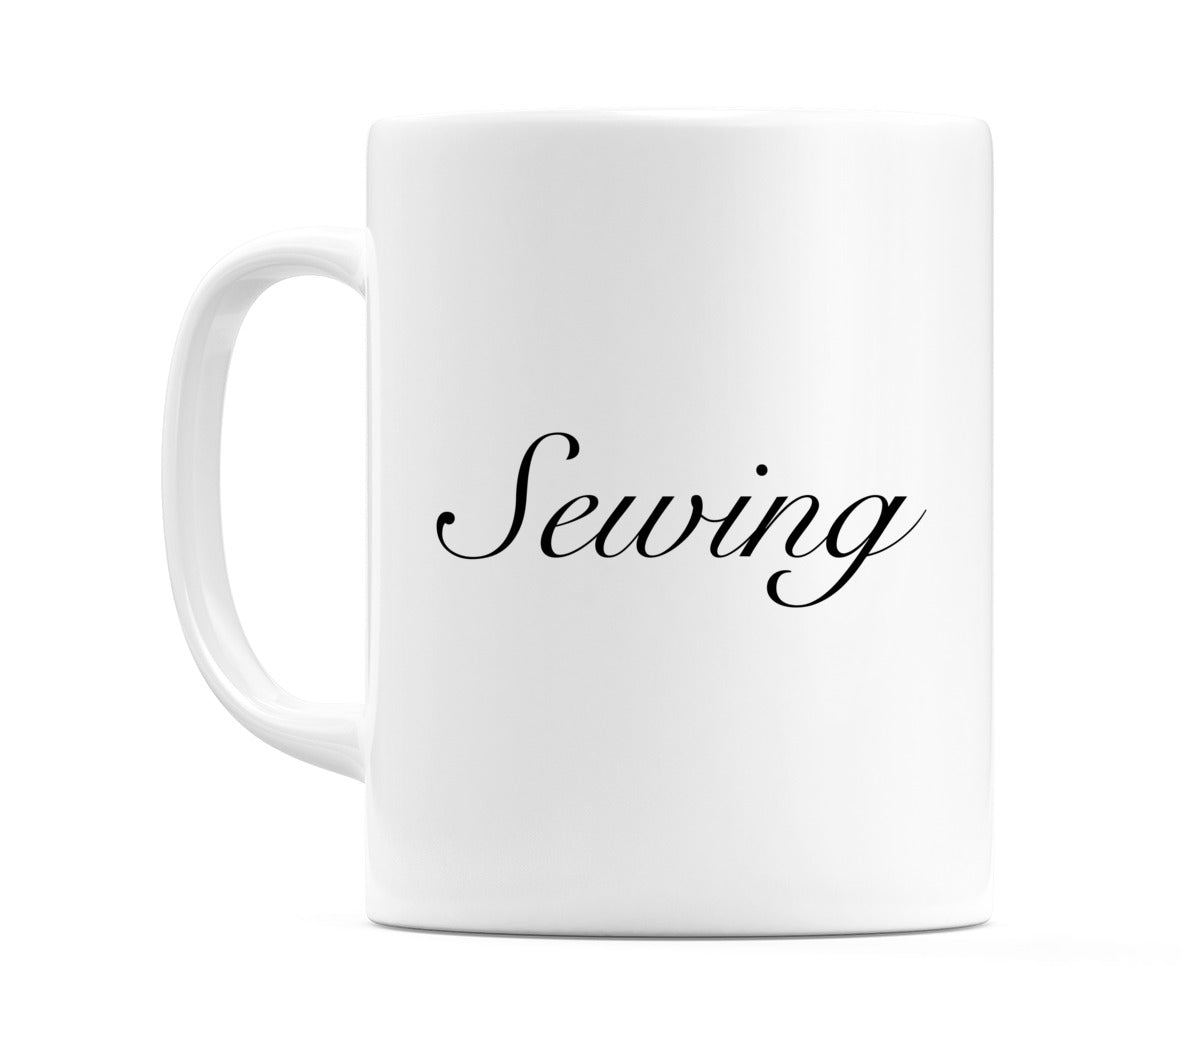 Sewing Mug